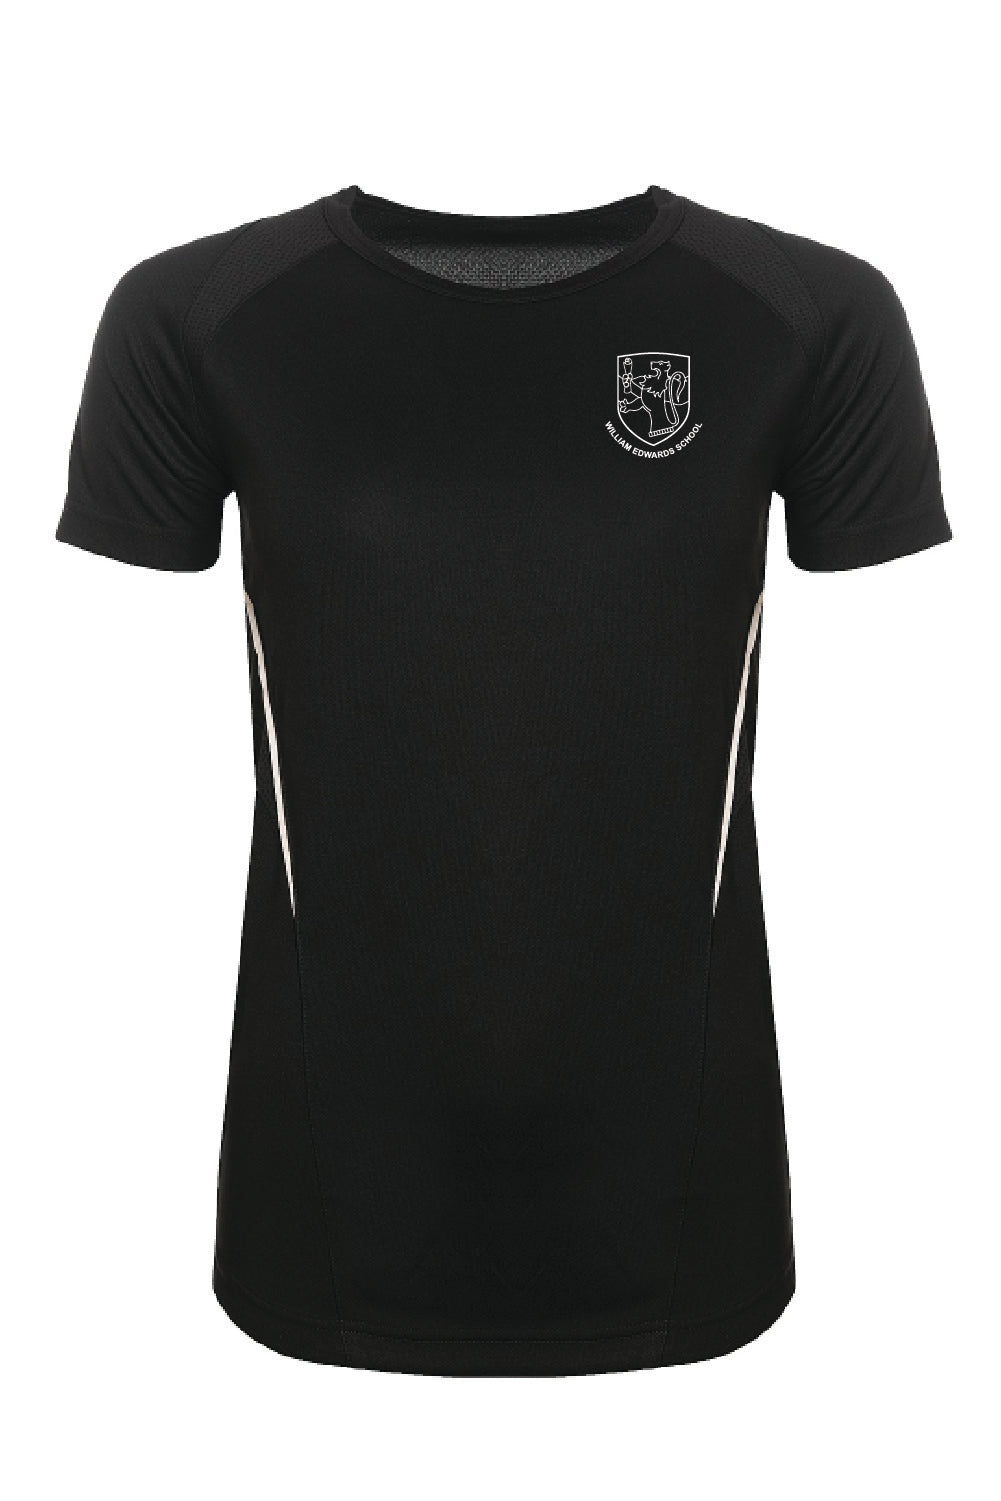 William Edwards School GCSE Dance T-shirt-personalised - Uniformwise Schoolwear